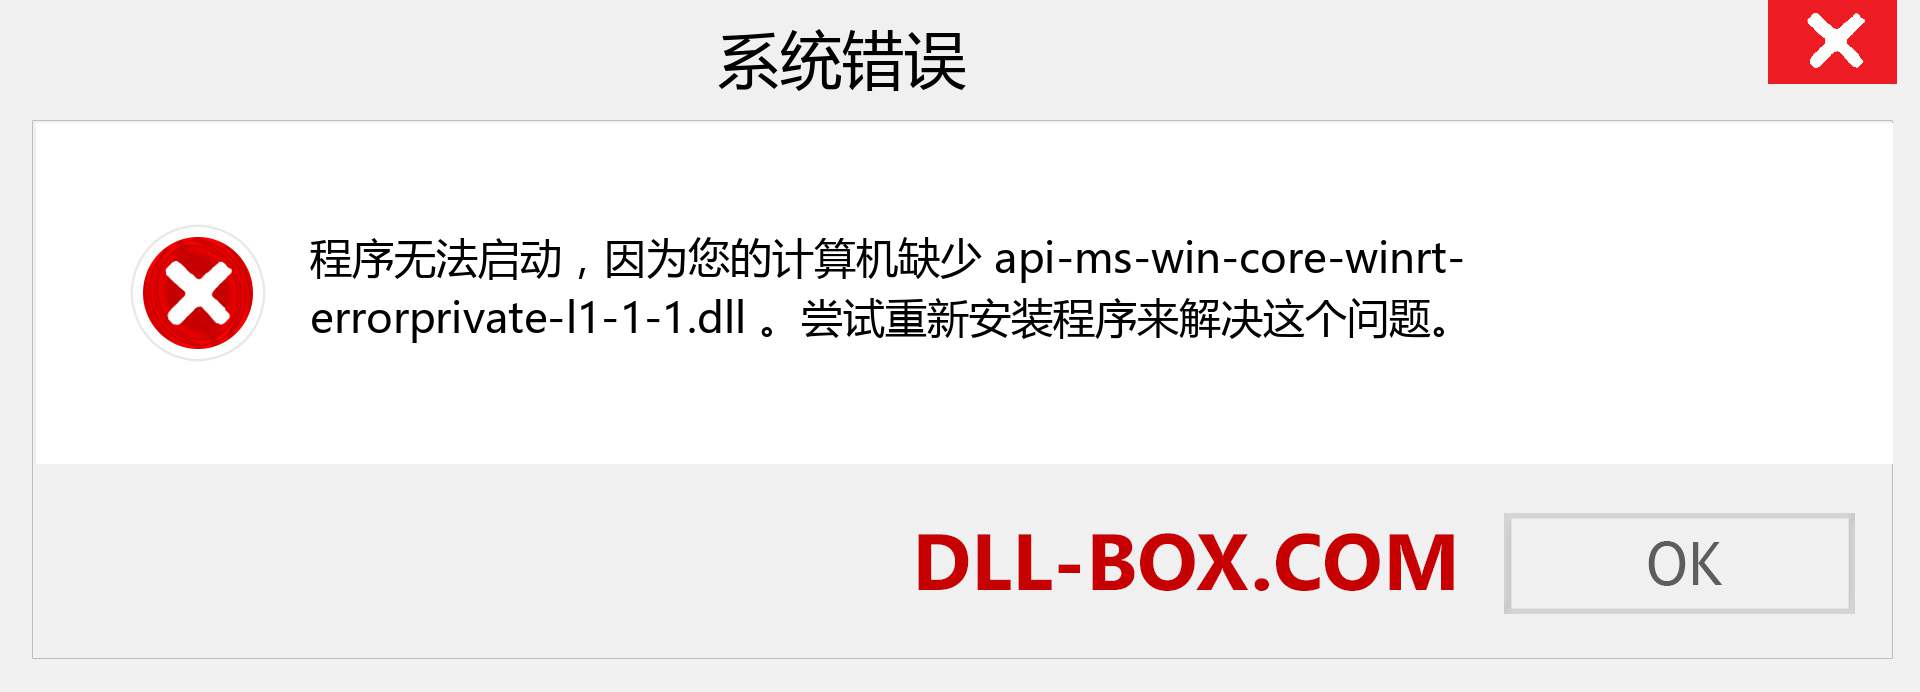 api-ms-win-core-winrt-errorprivate-l1-1-1.dll 文件丢失？。 适用于 Windows 7、8、10 的下载 - 修复 Windows、照片、图像上的 api-ms-win-core-winrt-errorprivate-l1-1-1 dll 丢失错误